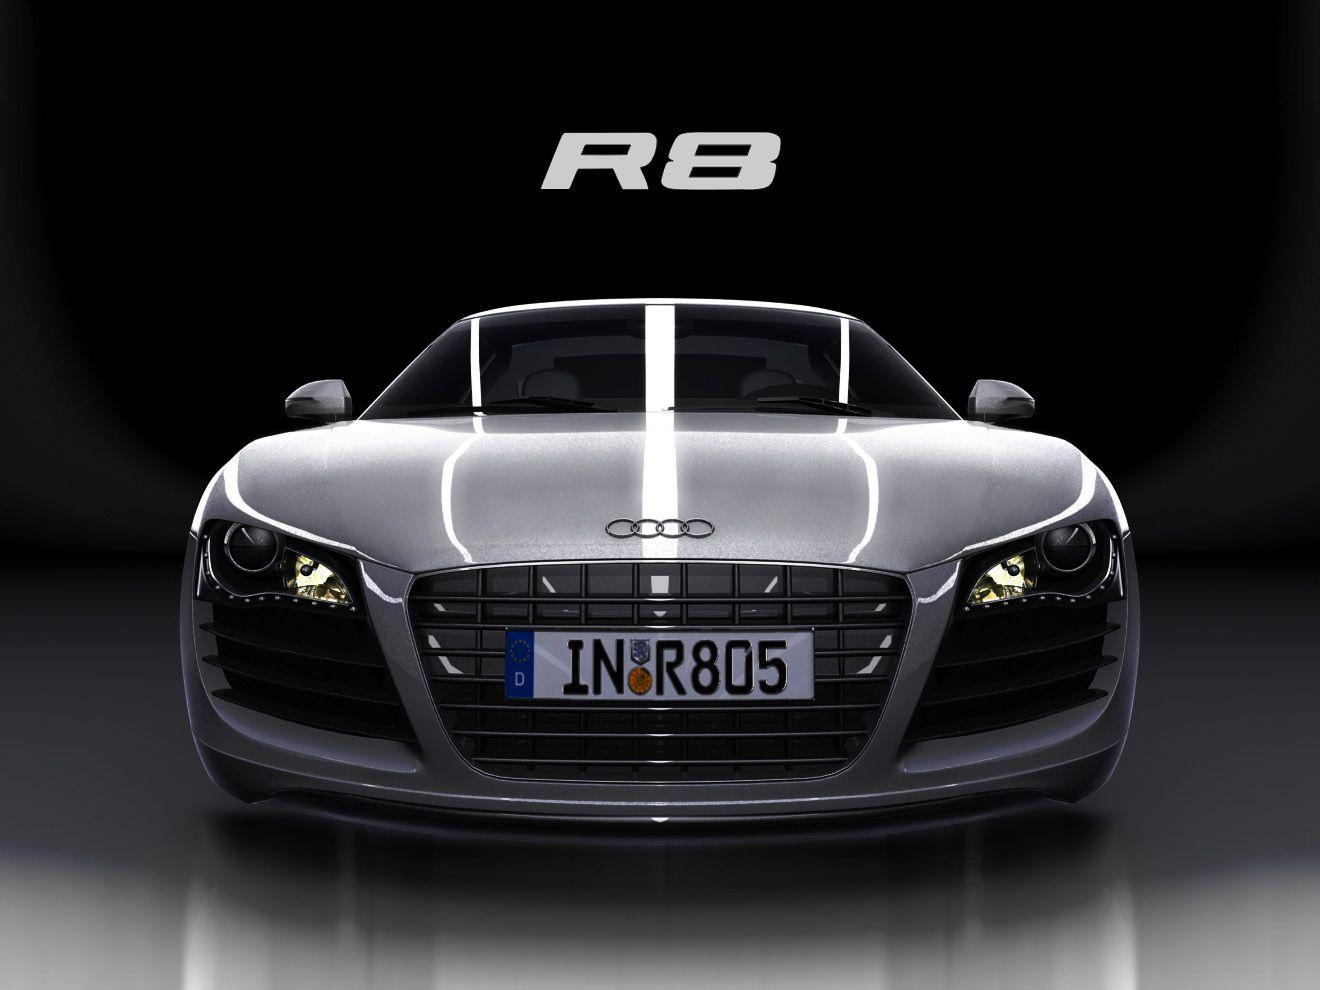 Black Audi R8 Logo - Audi R8 - Cars Fany